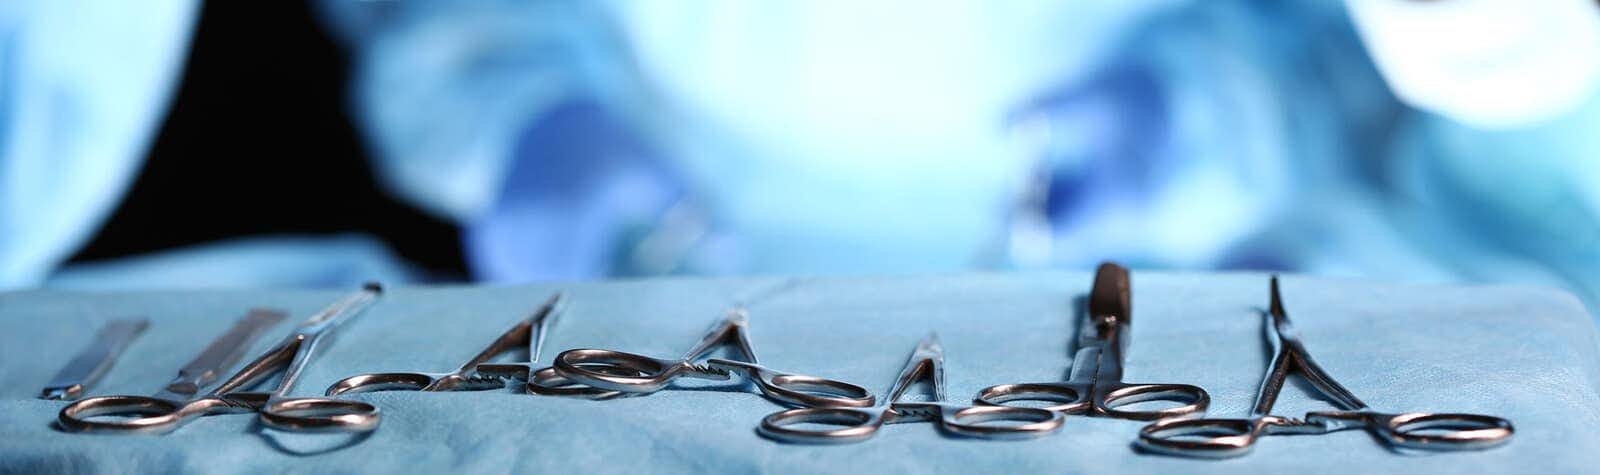 $25 Million Medical Malpractice Verdict